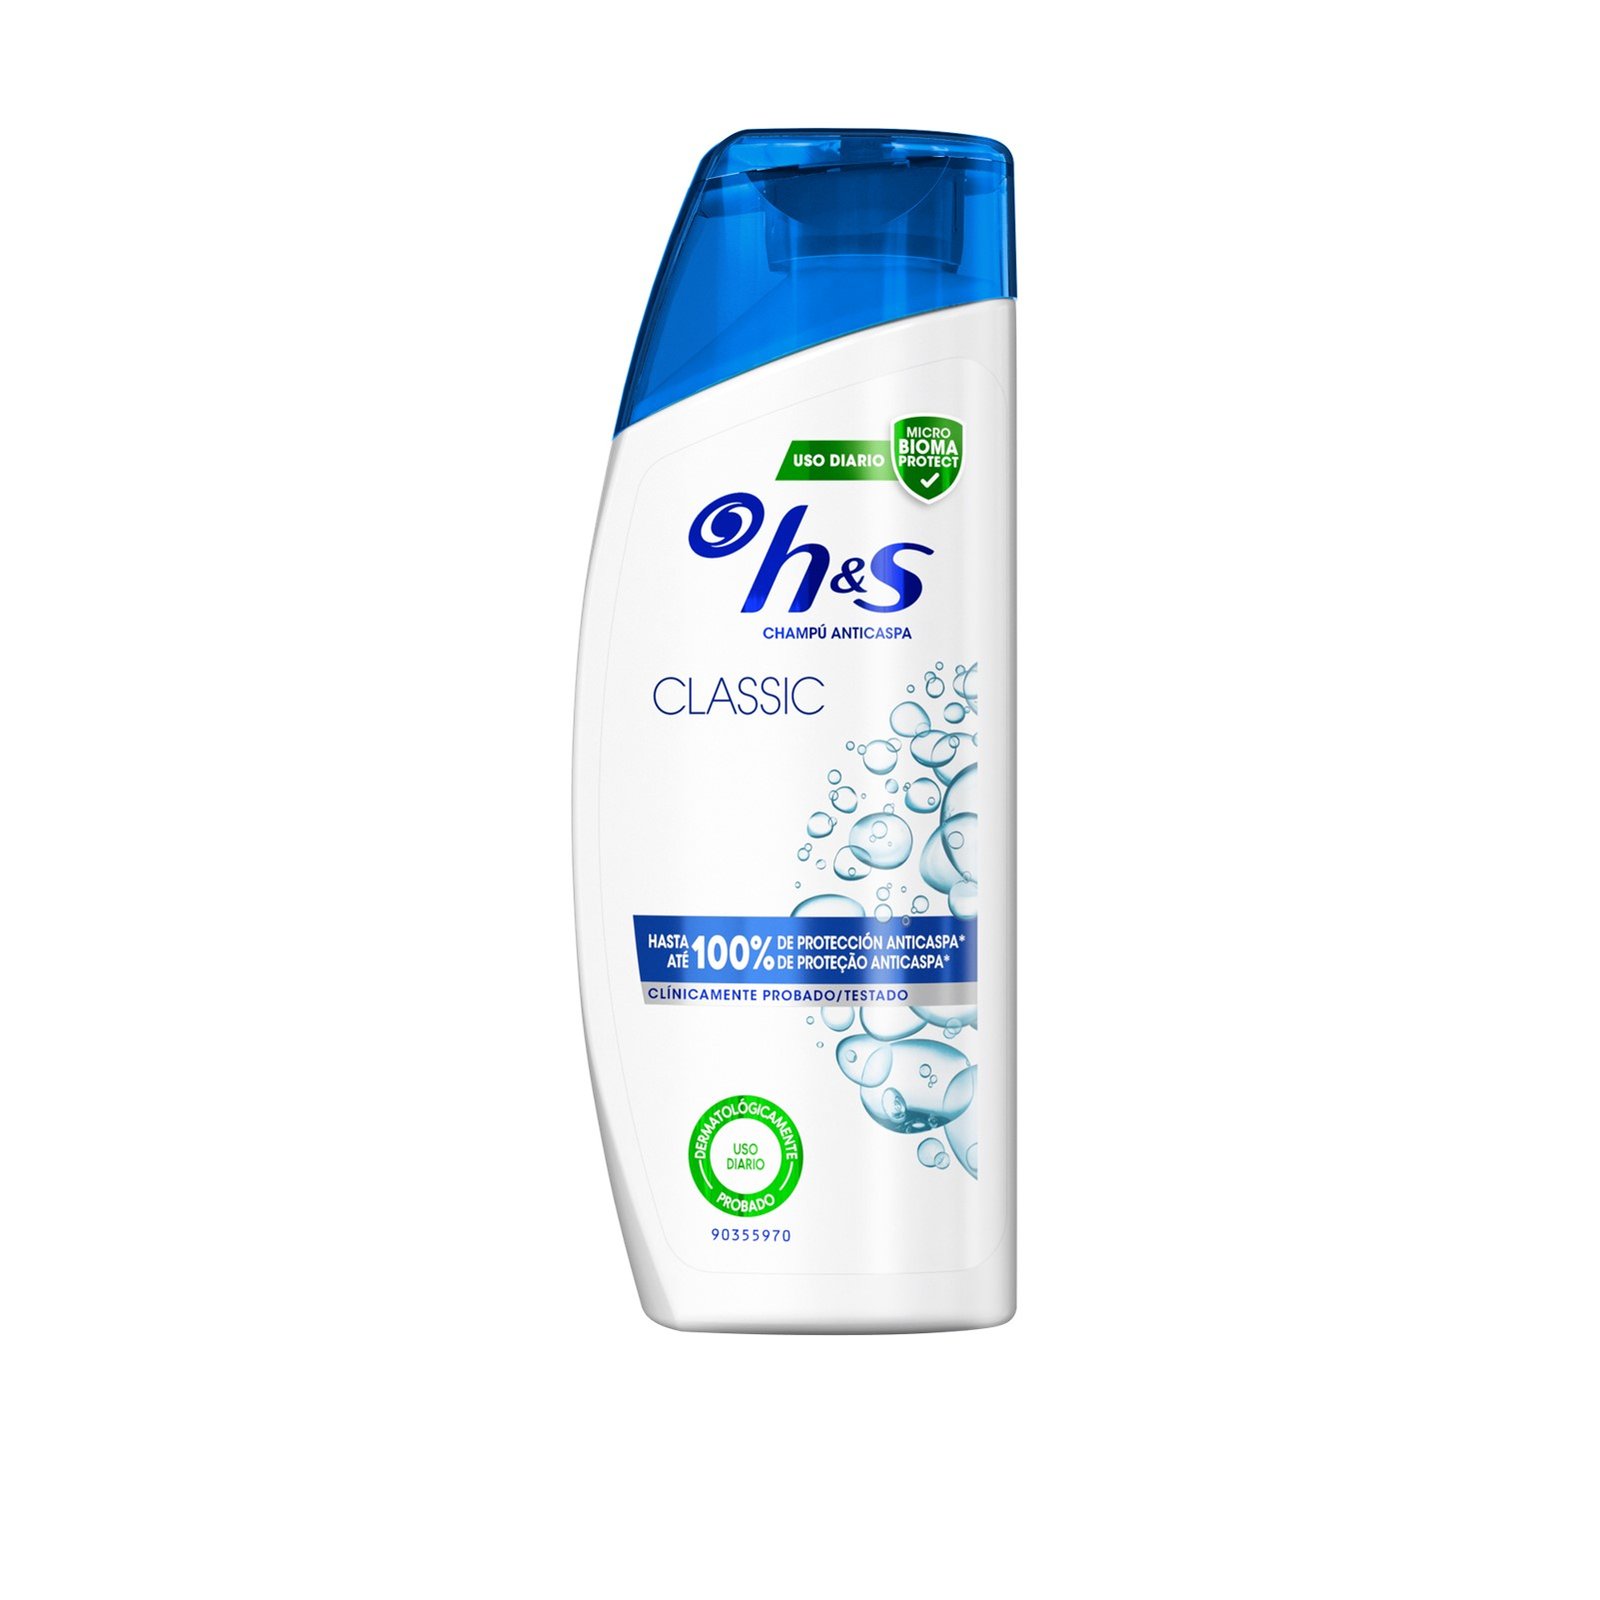 H&S Classic Clean Shampoo